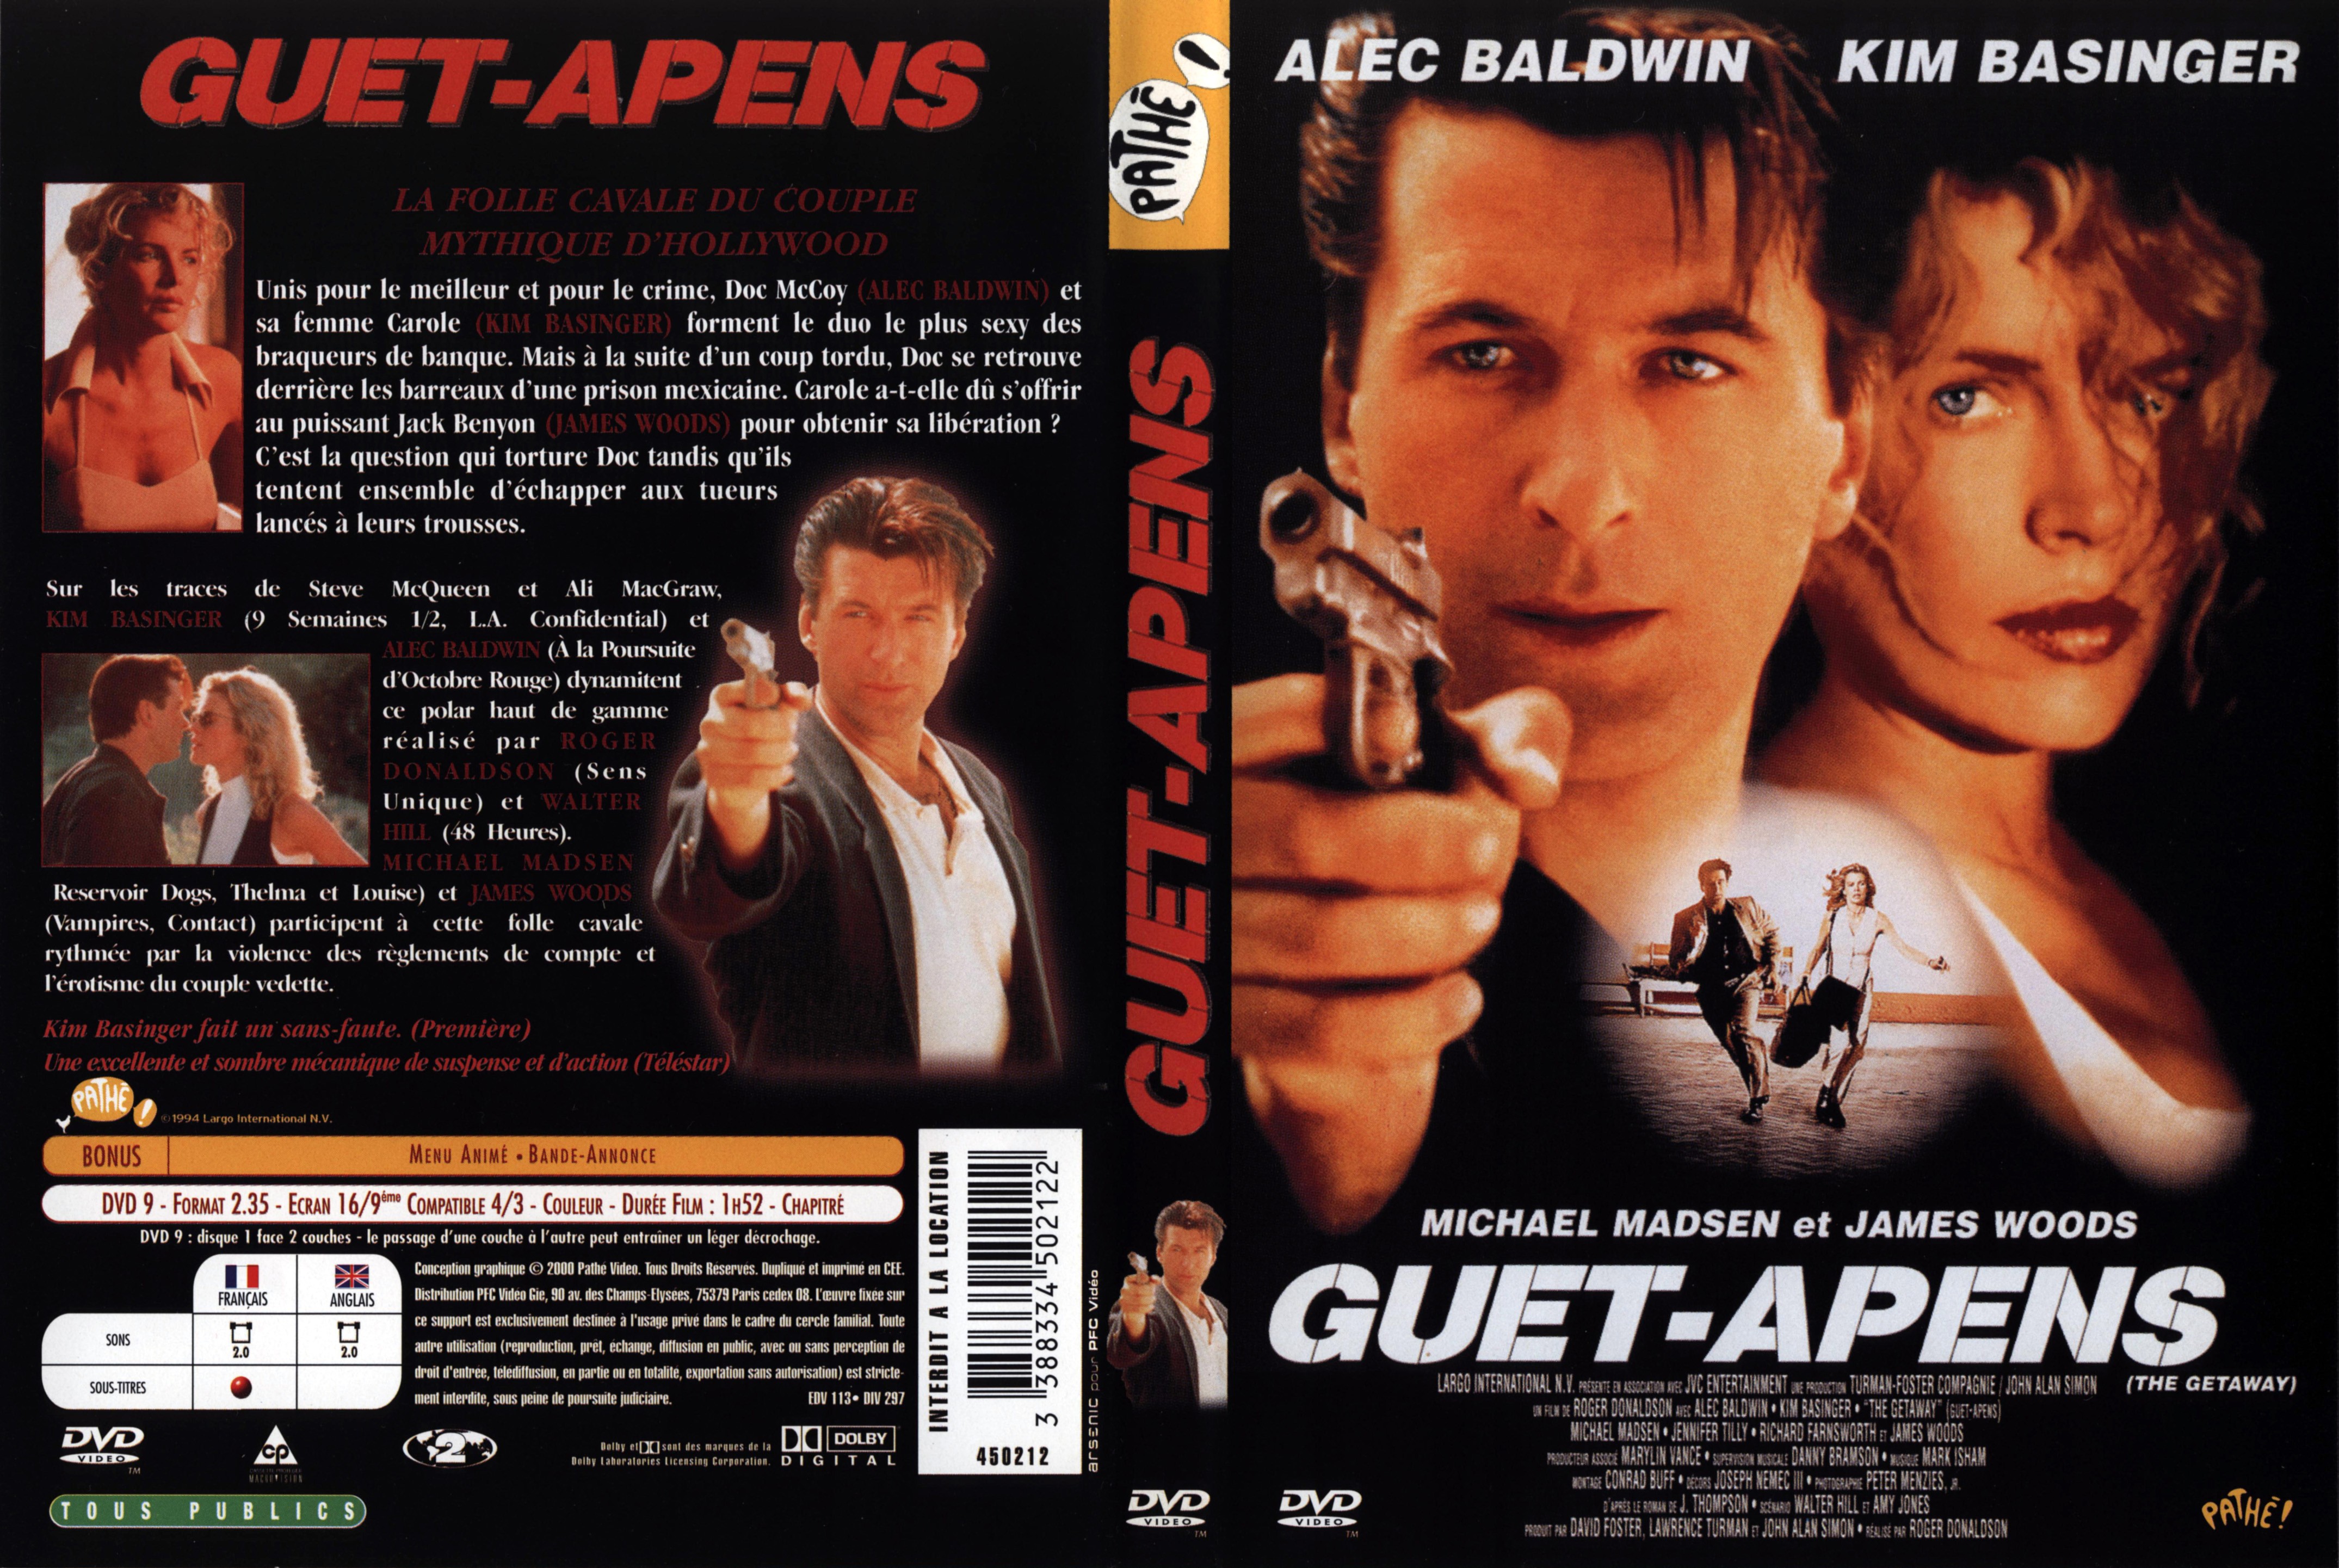 Jaquette DVD Guet-apens (1994)